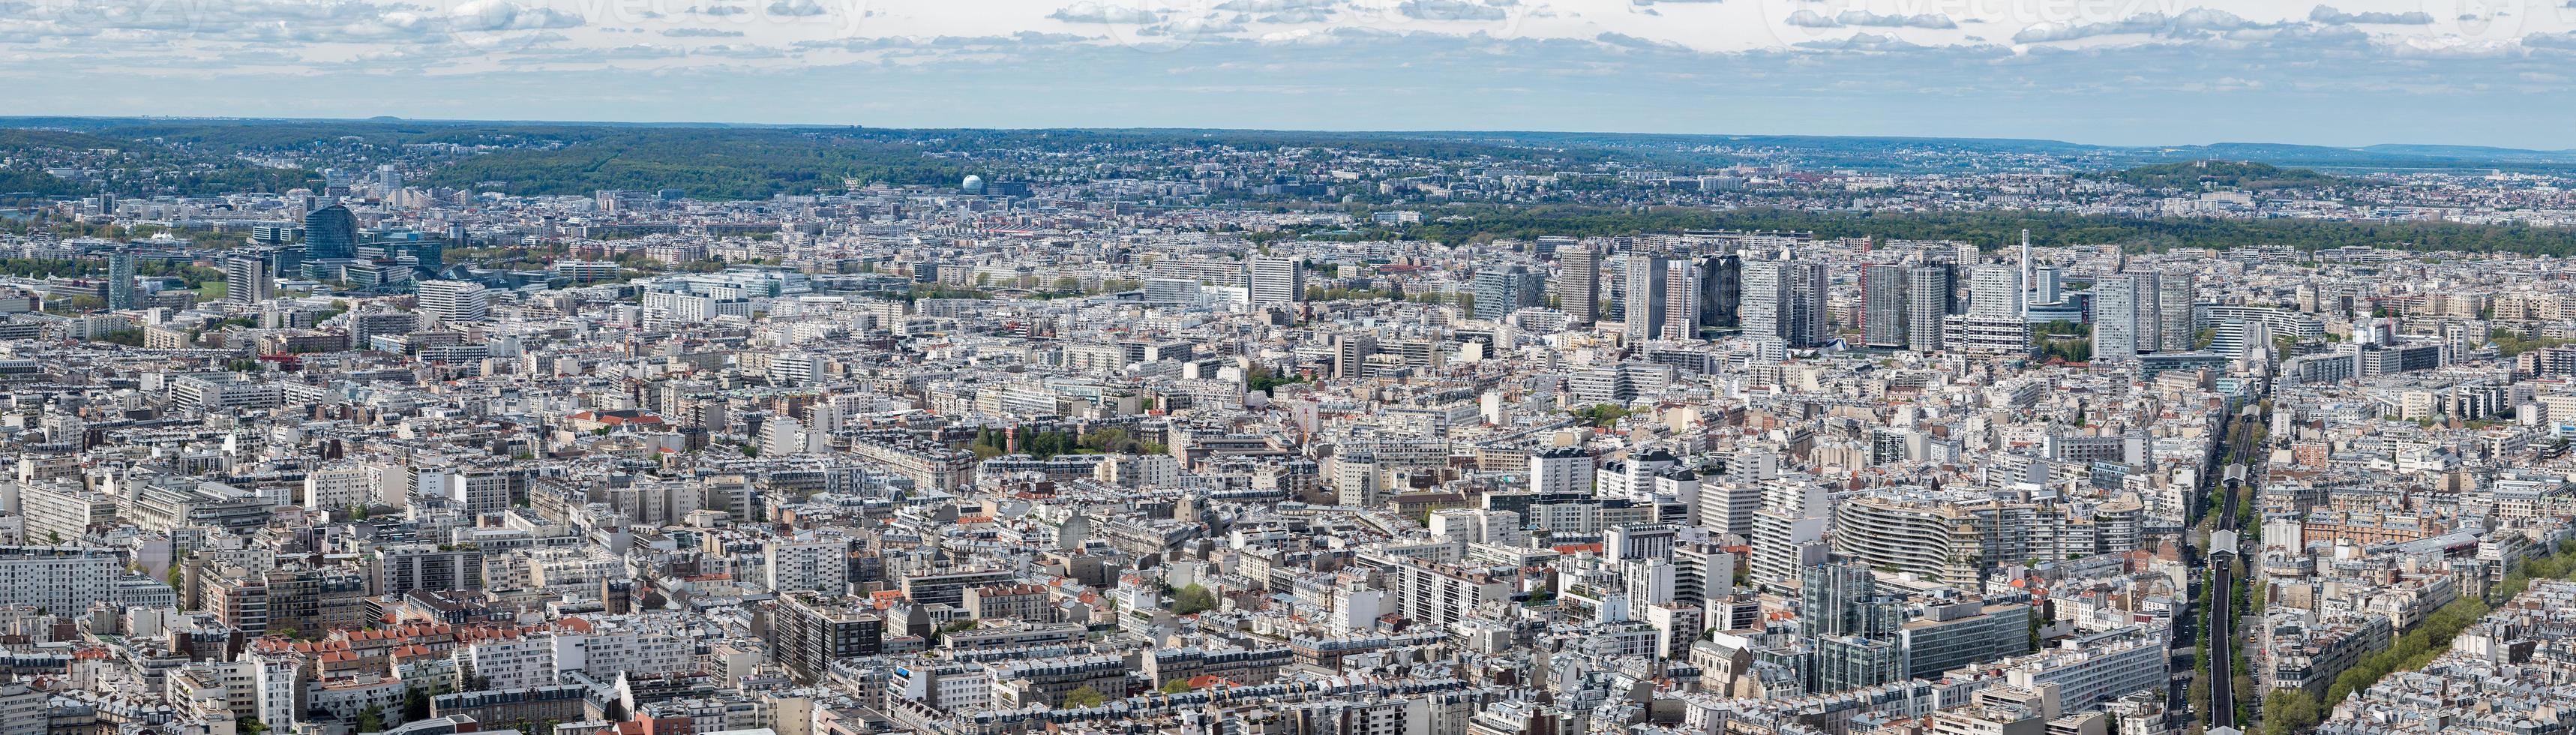 paris cityscape aerial view panorama photo